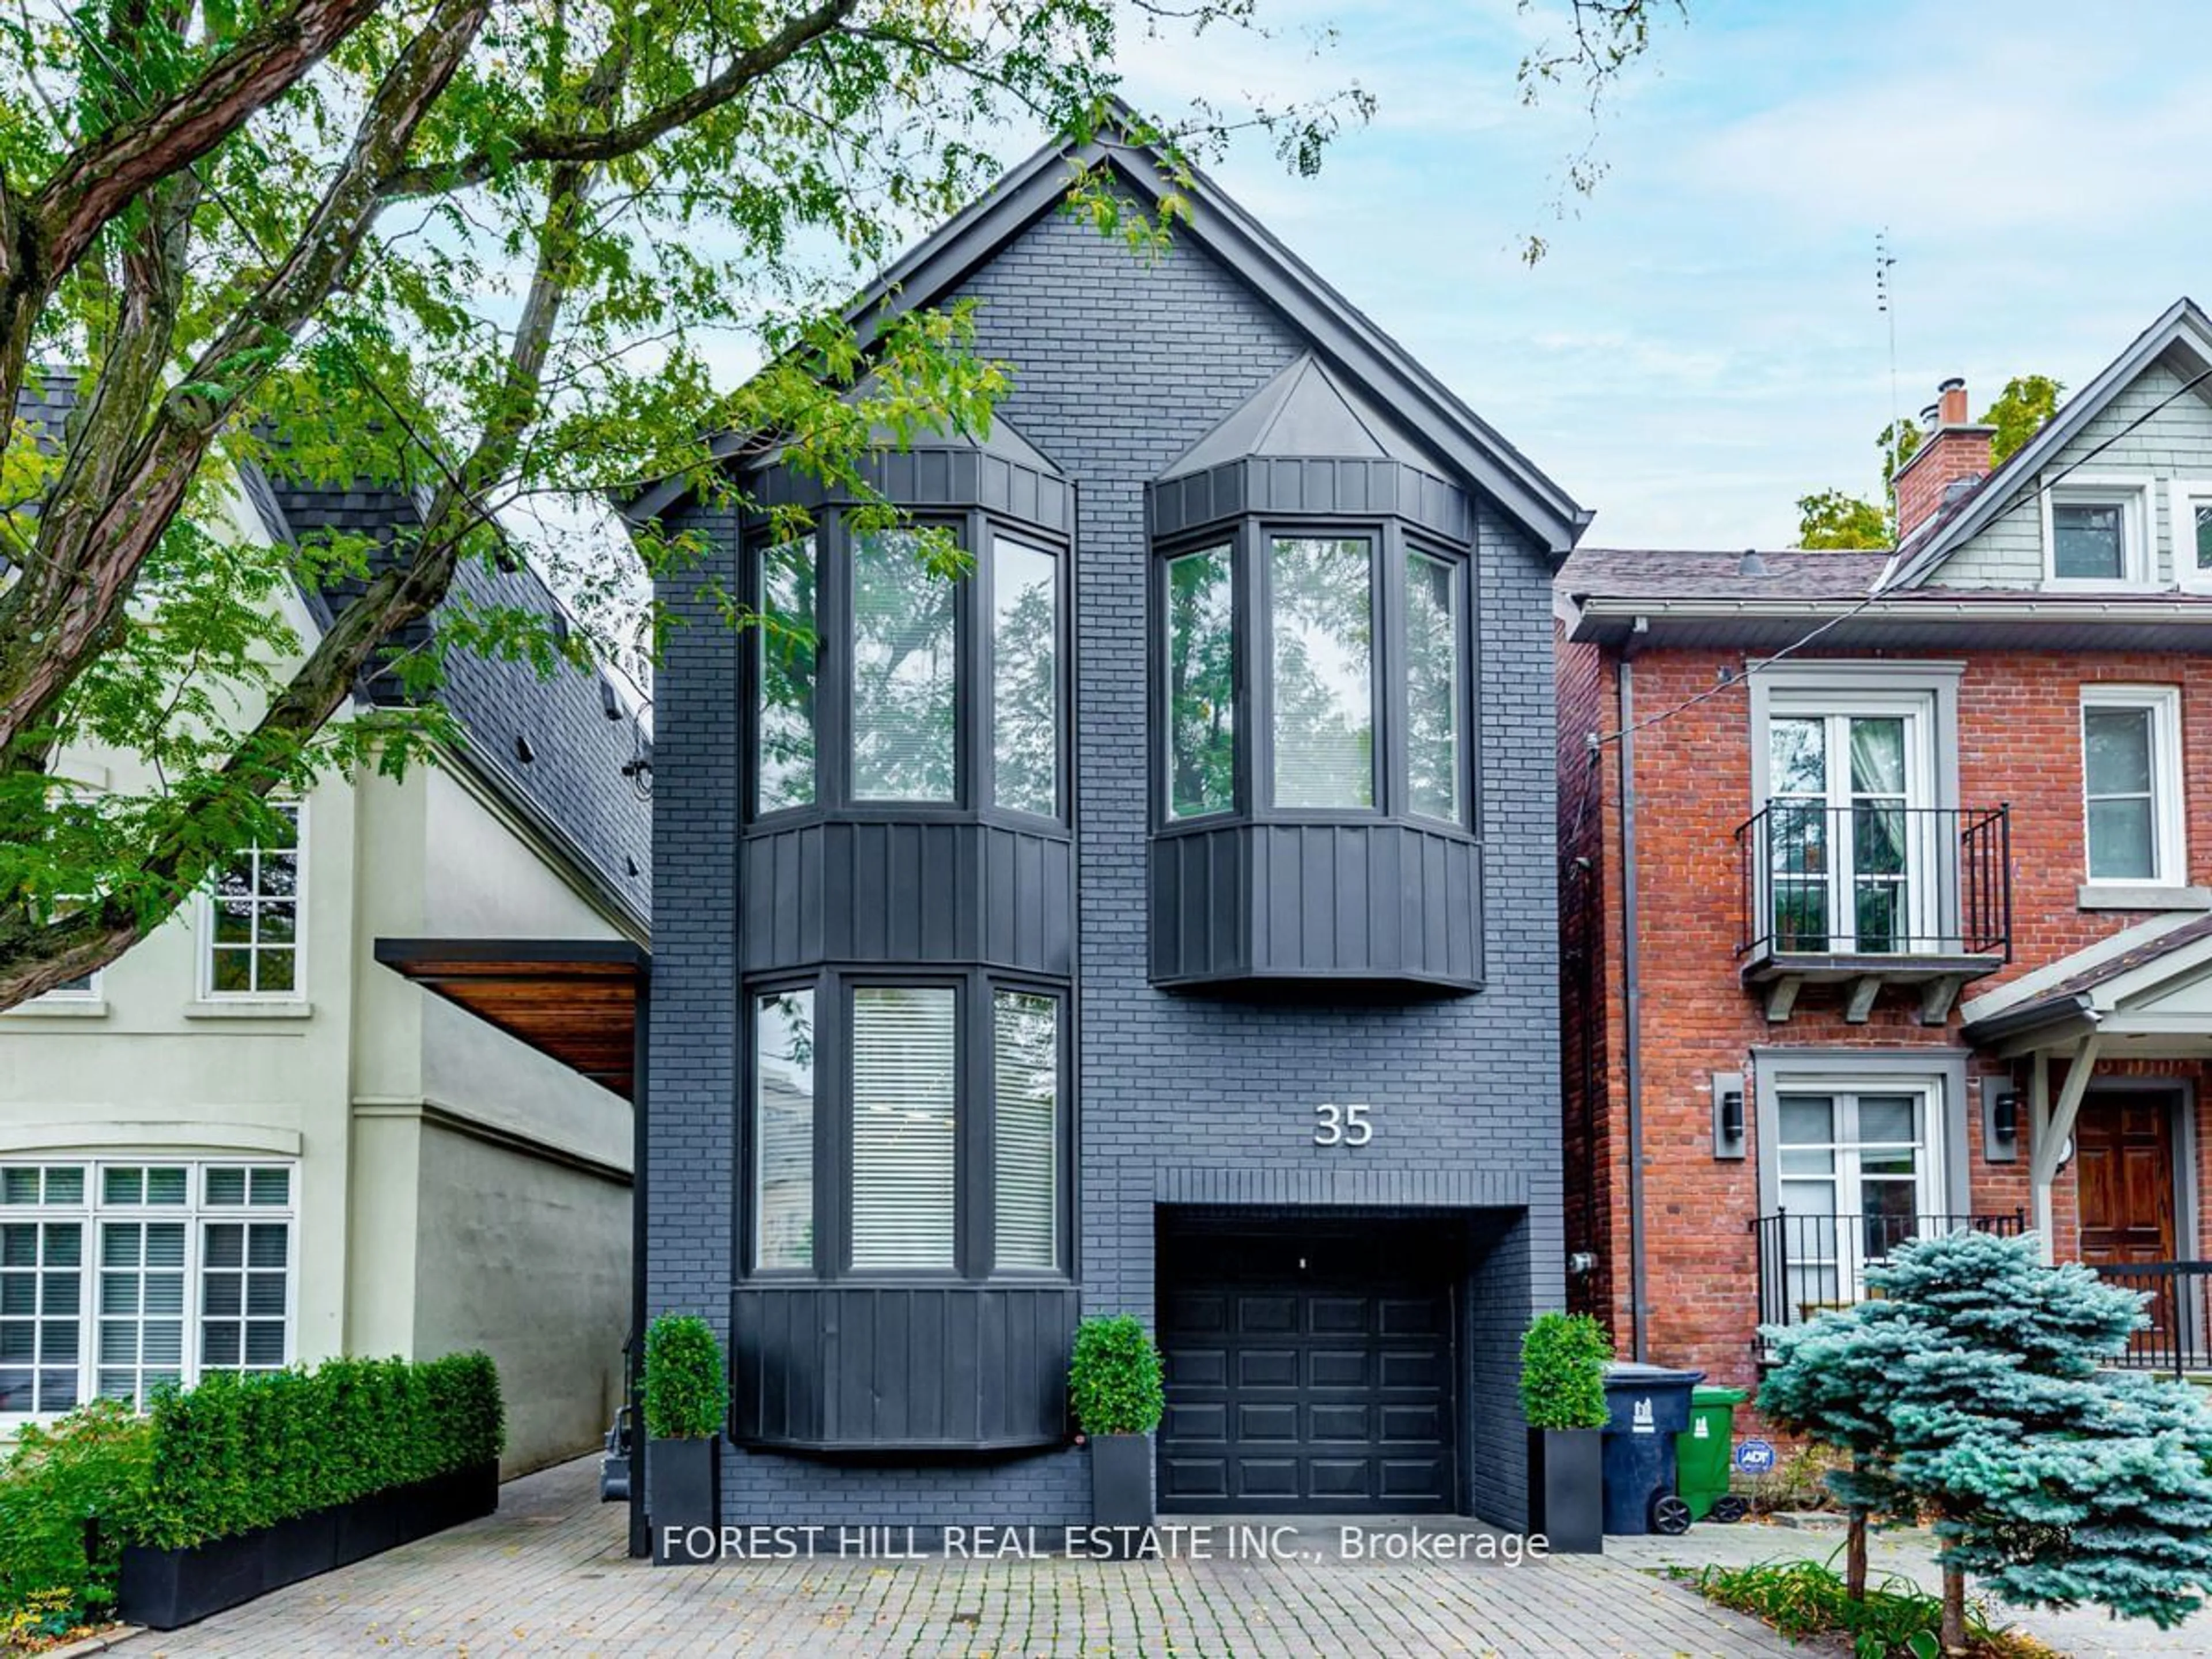 Home with brick exterior material for 35 Balmoral Ave, Toronto Ontario M4V 1J5